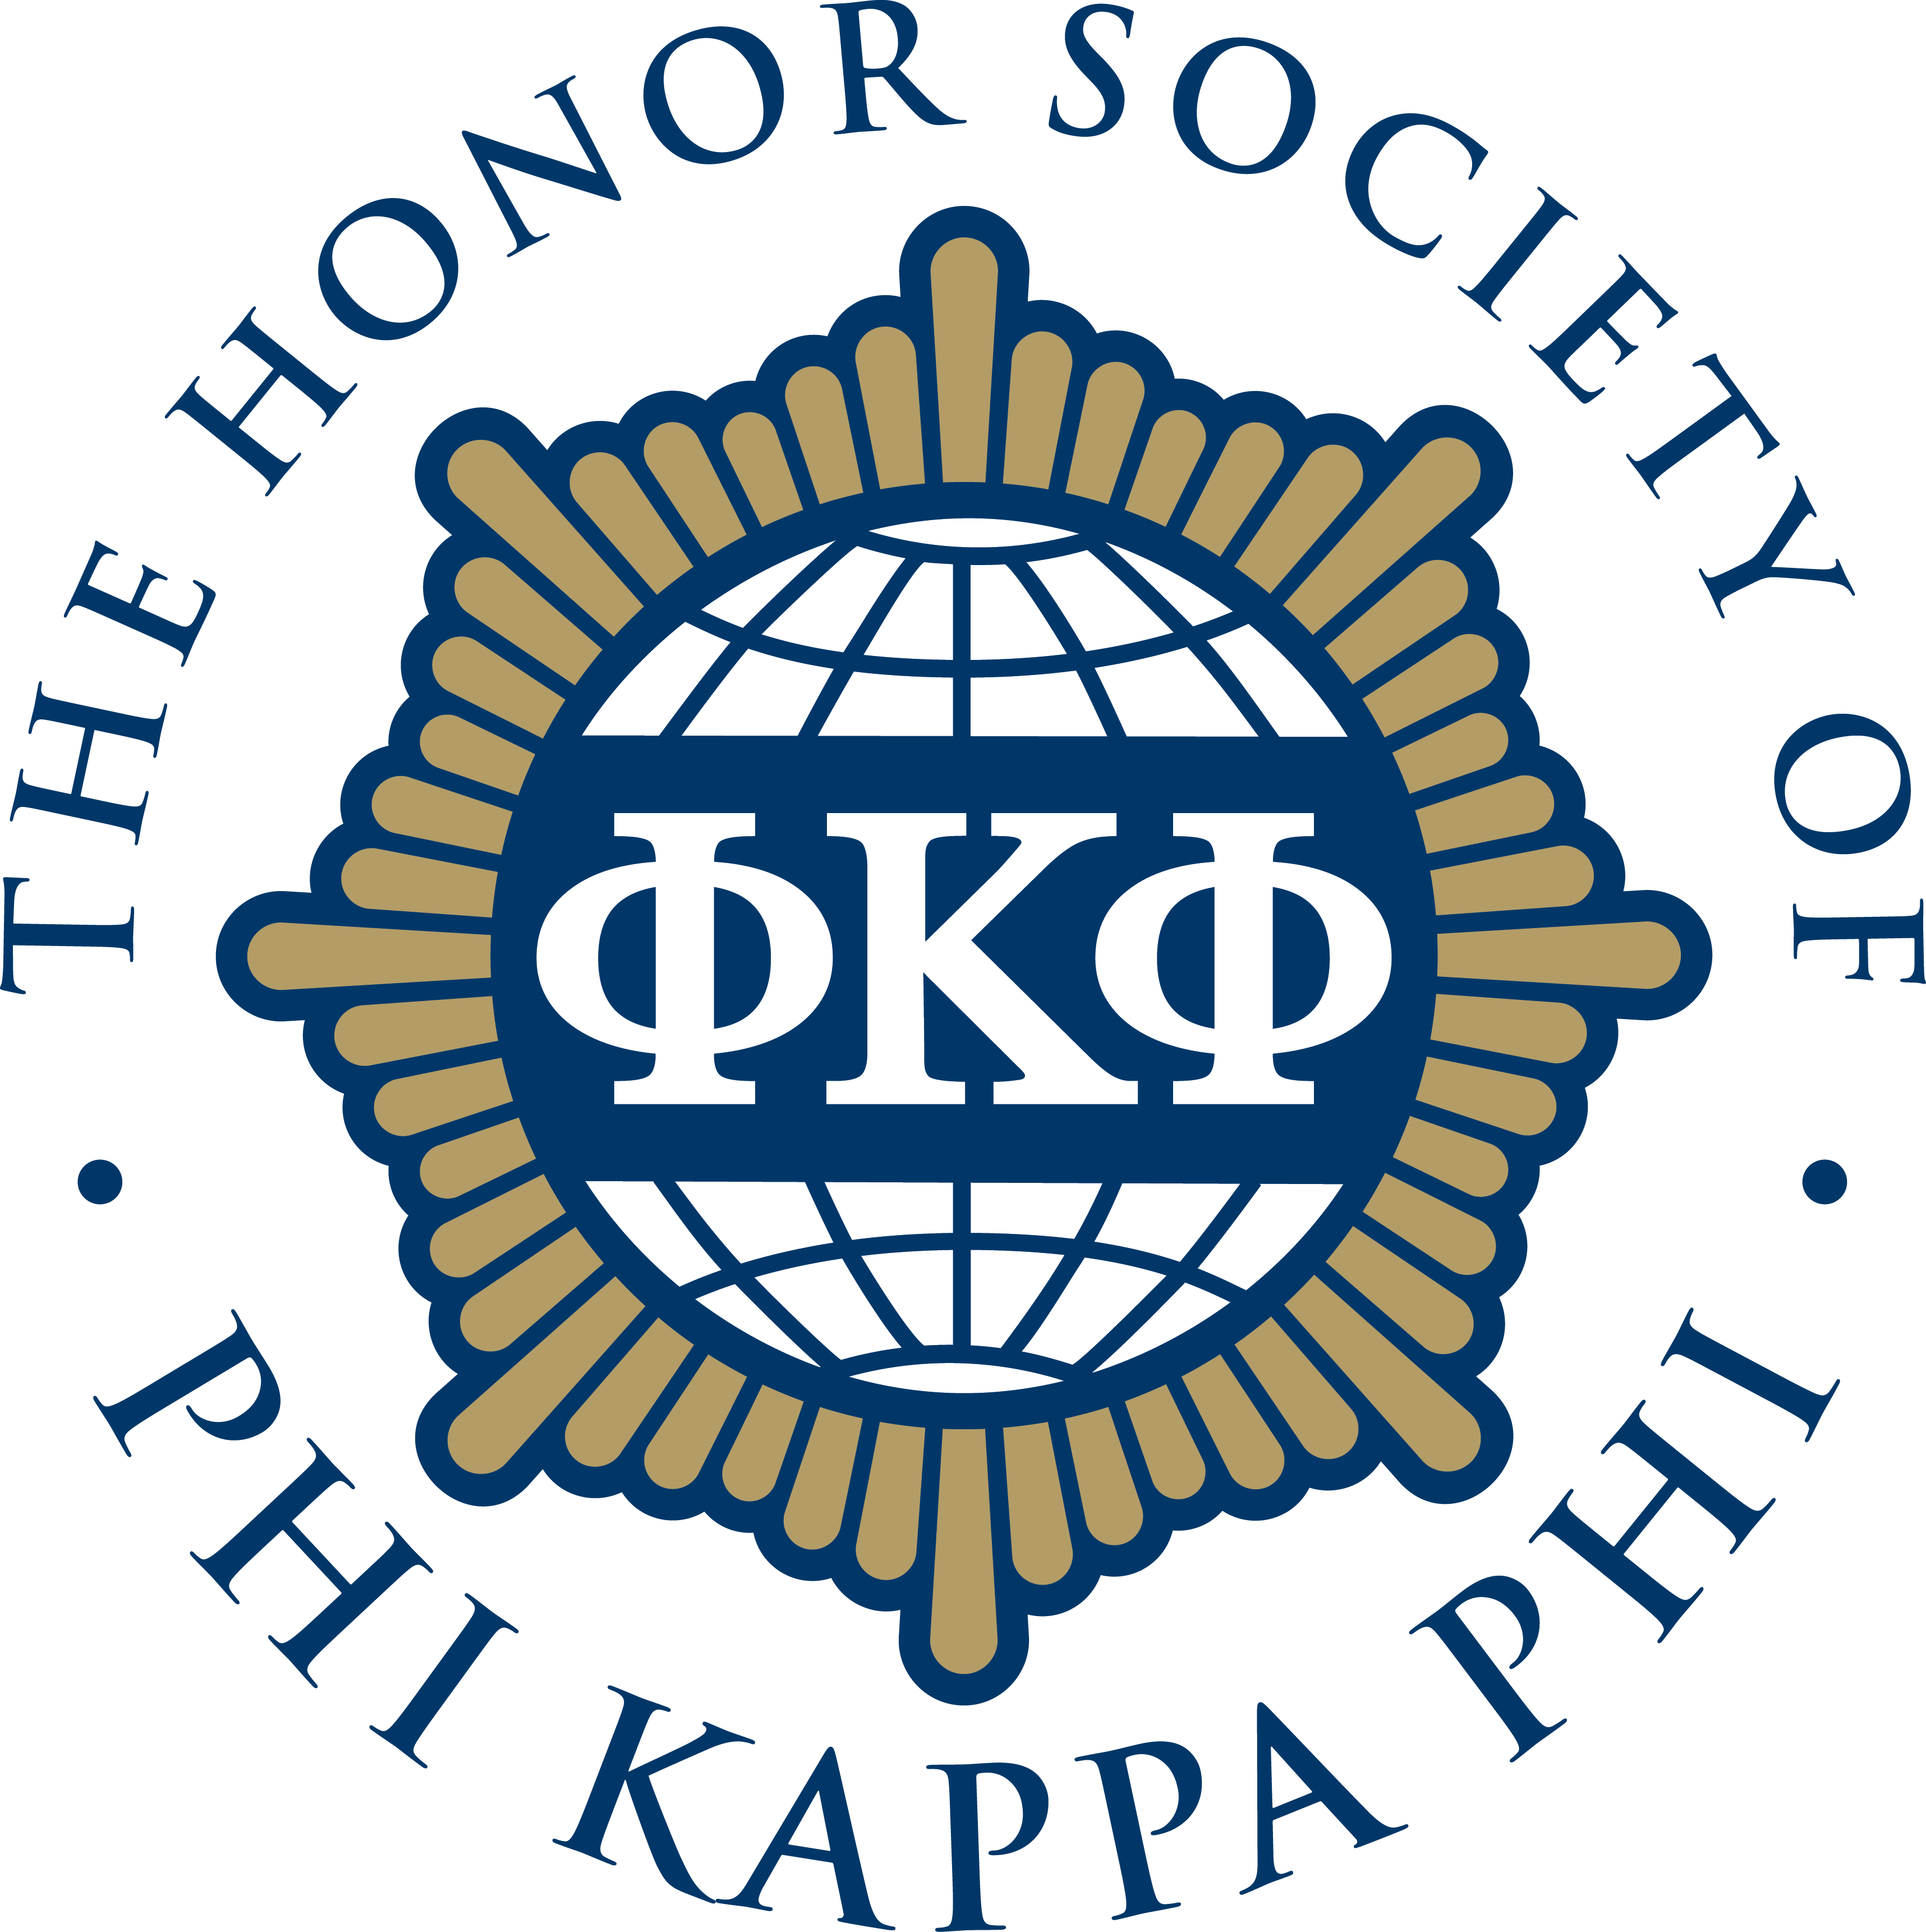 Kappa Logo png images